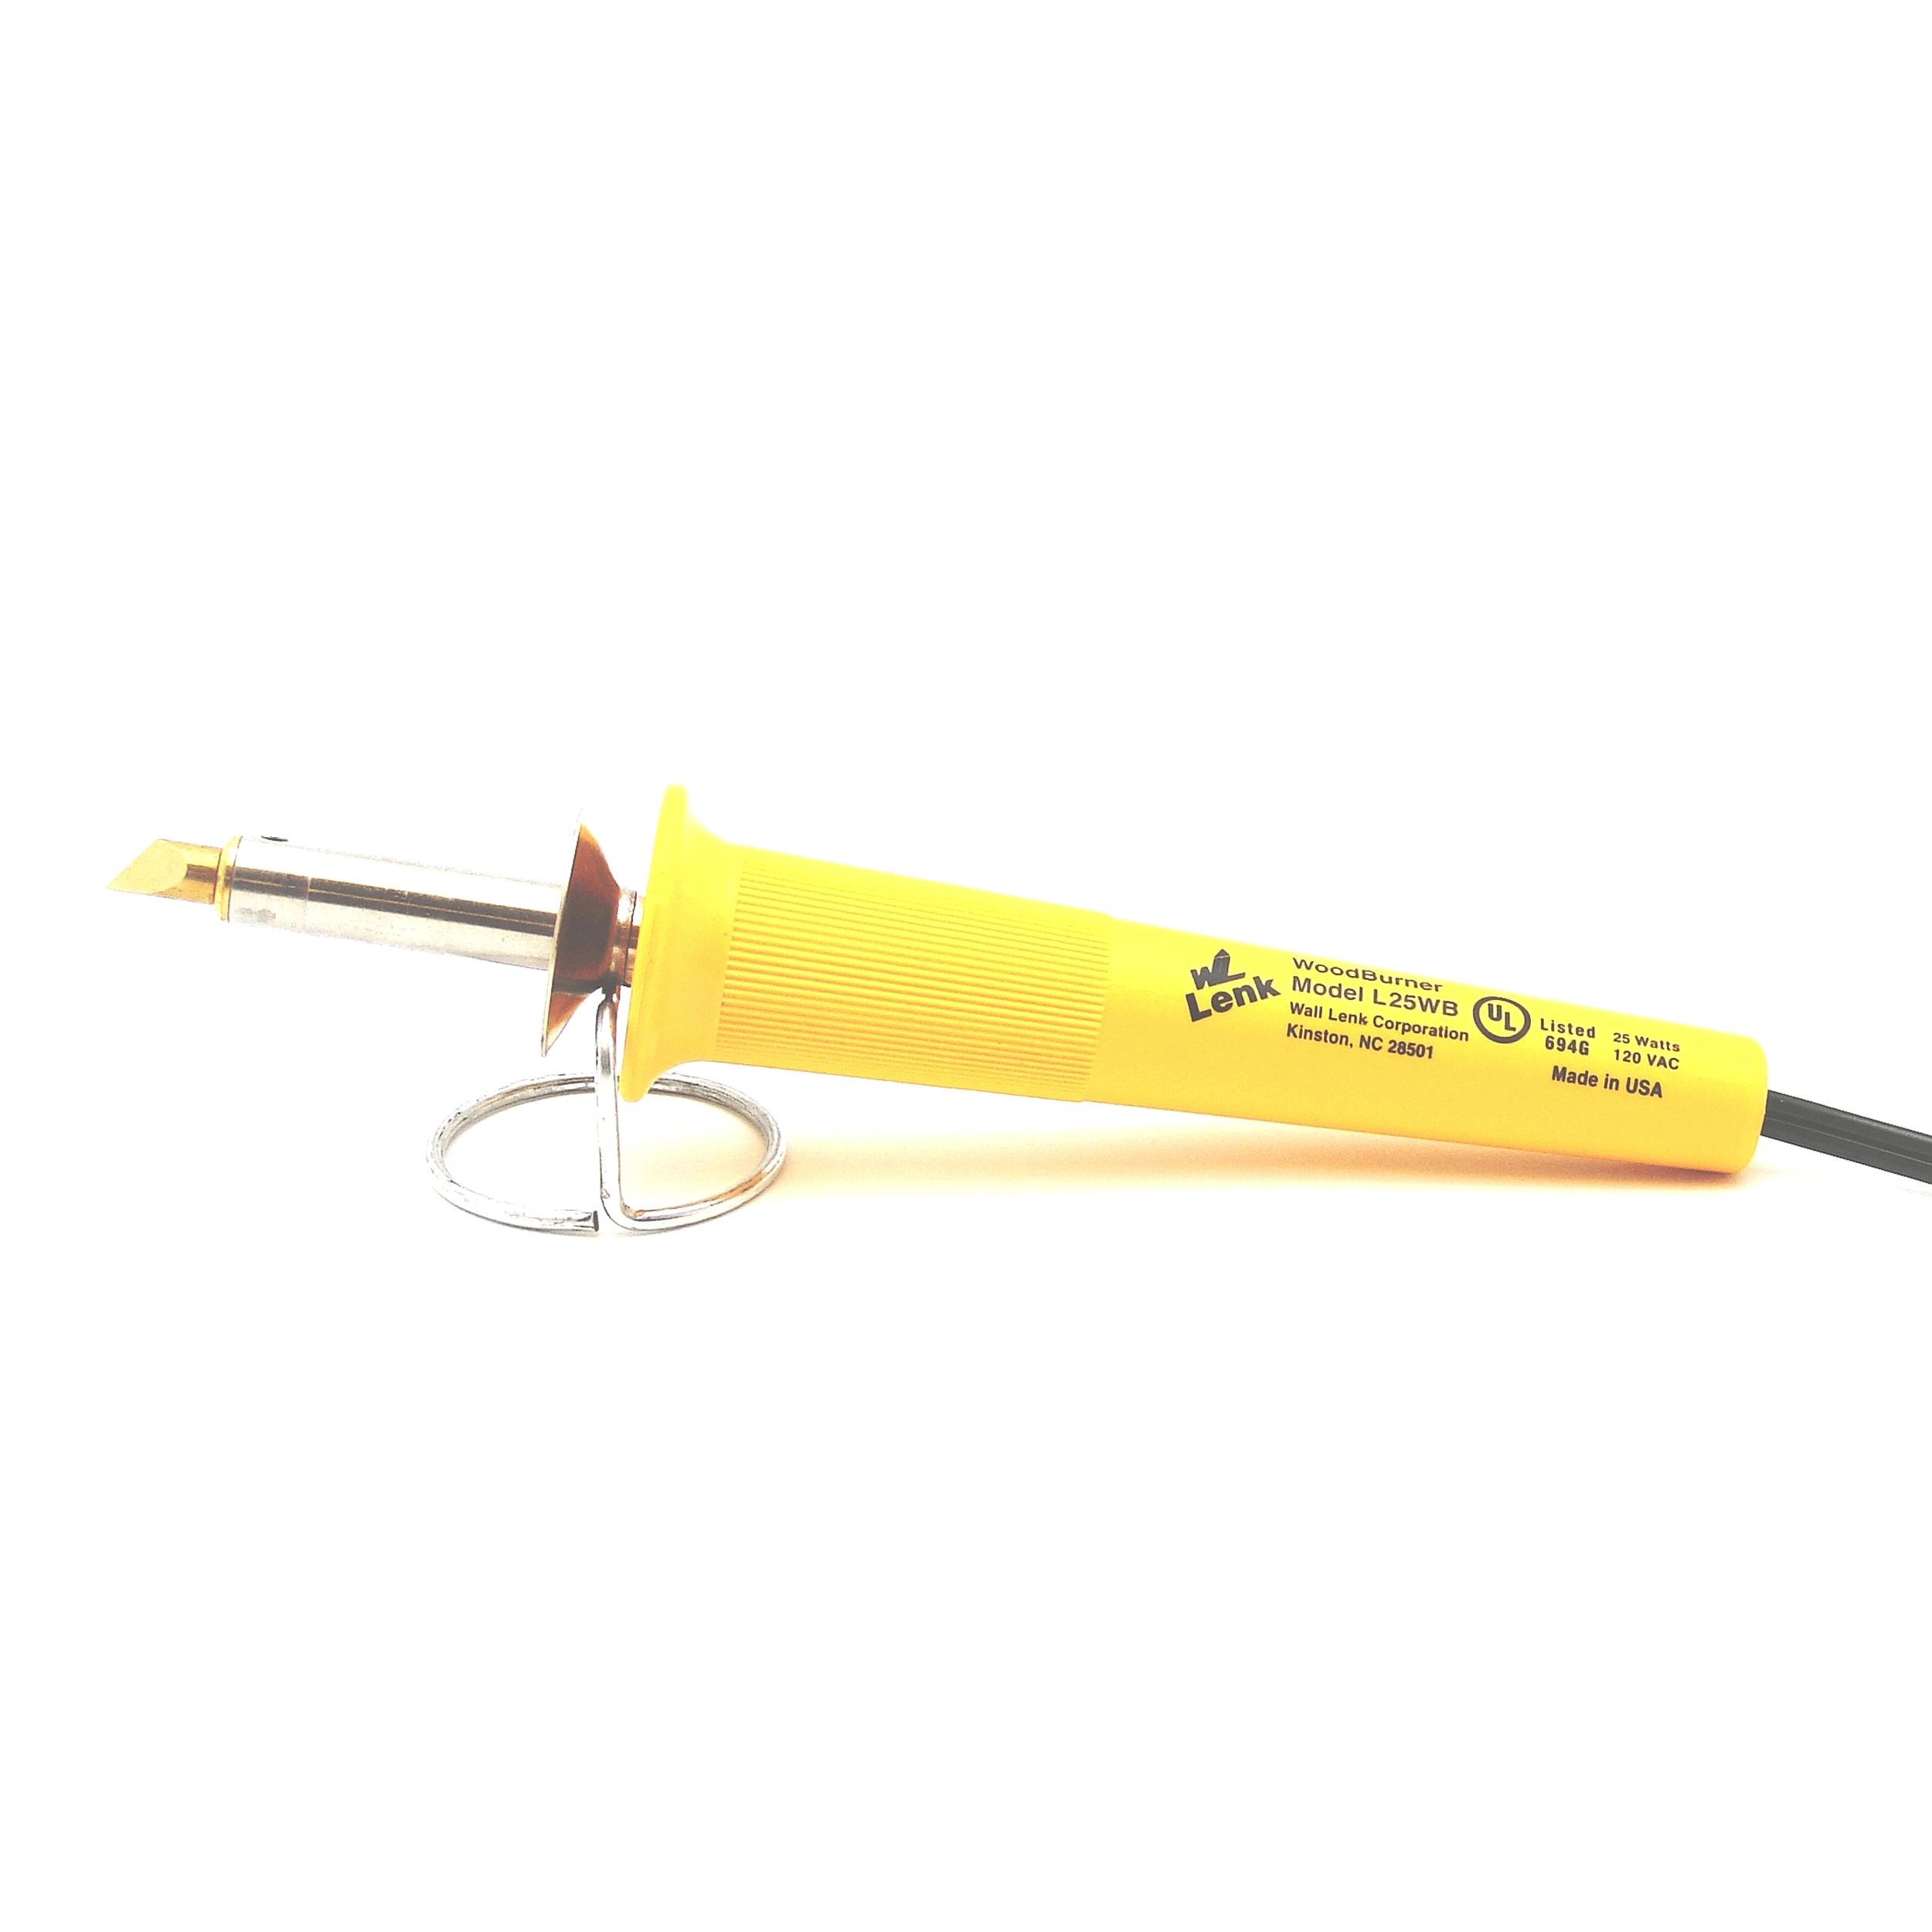 25 Watt Woodburning Pen